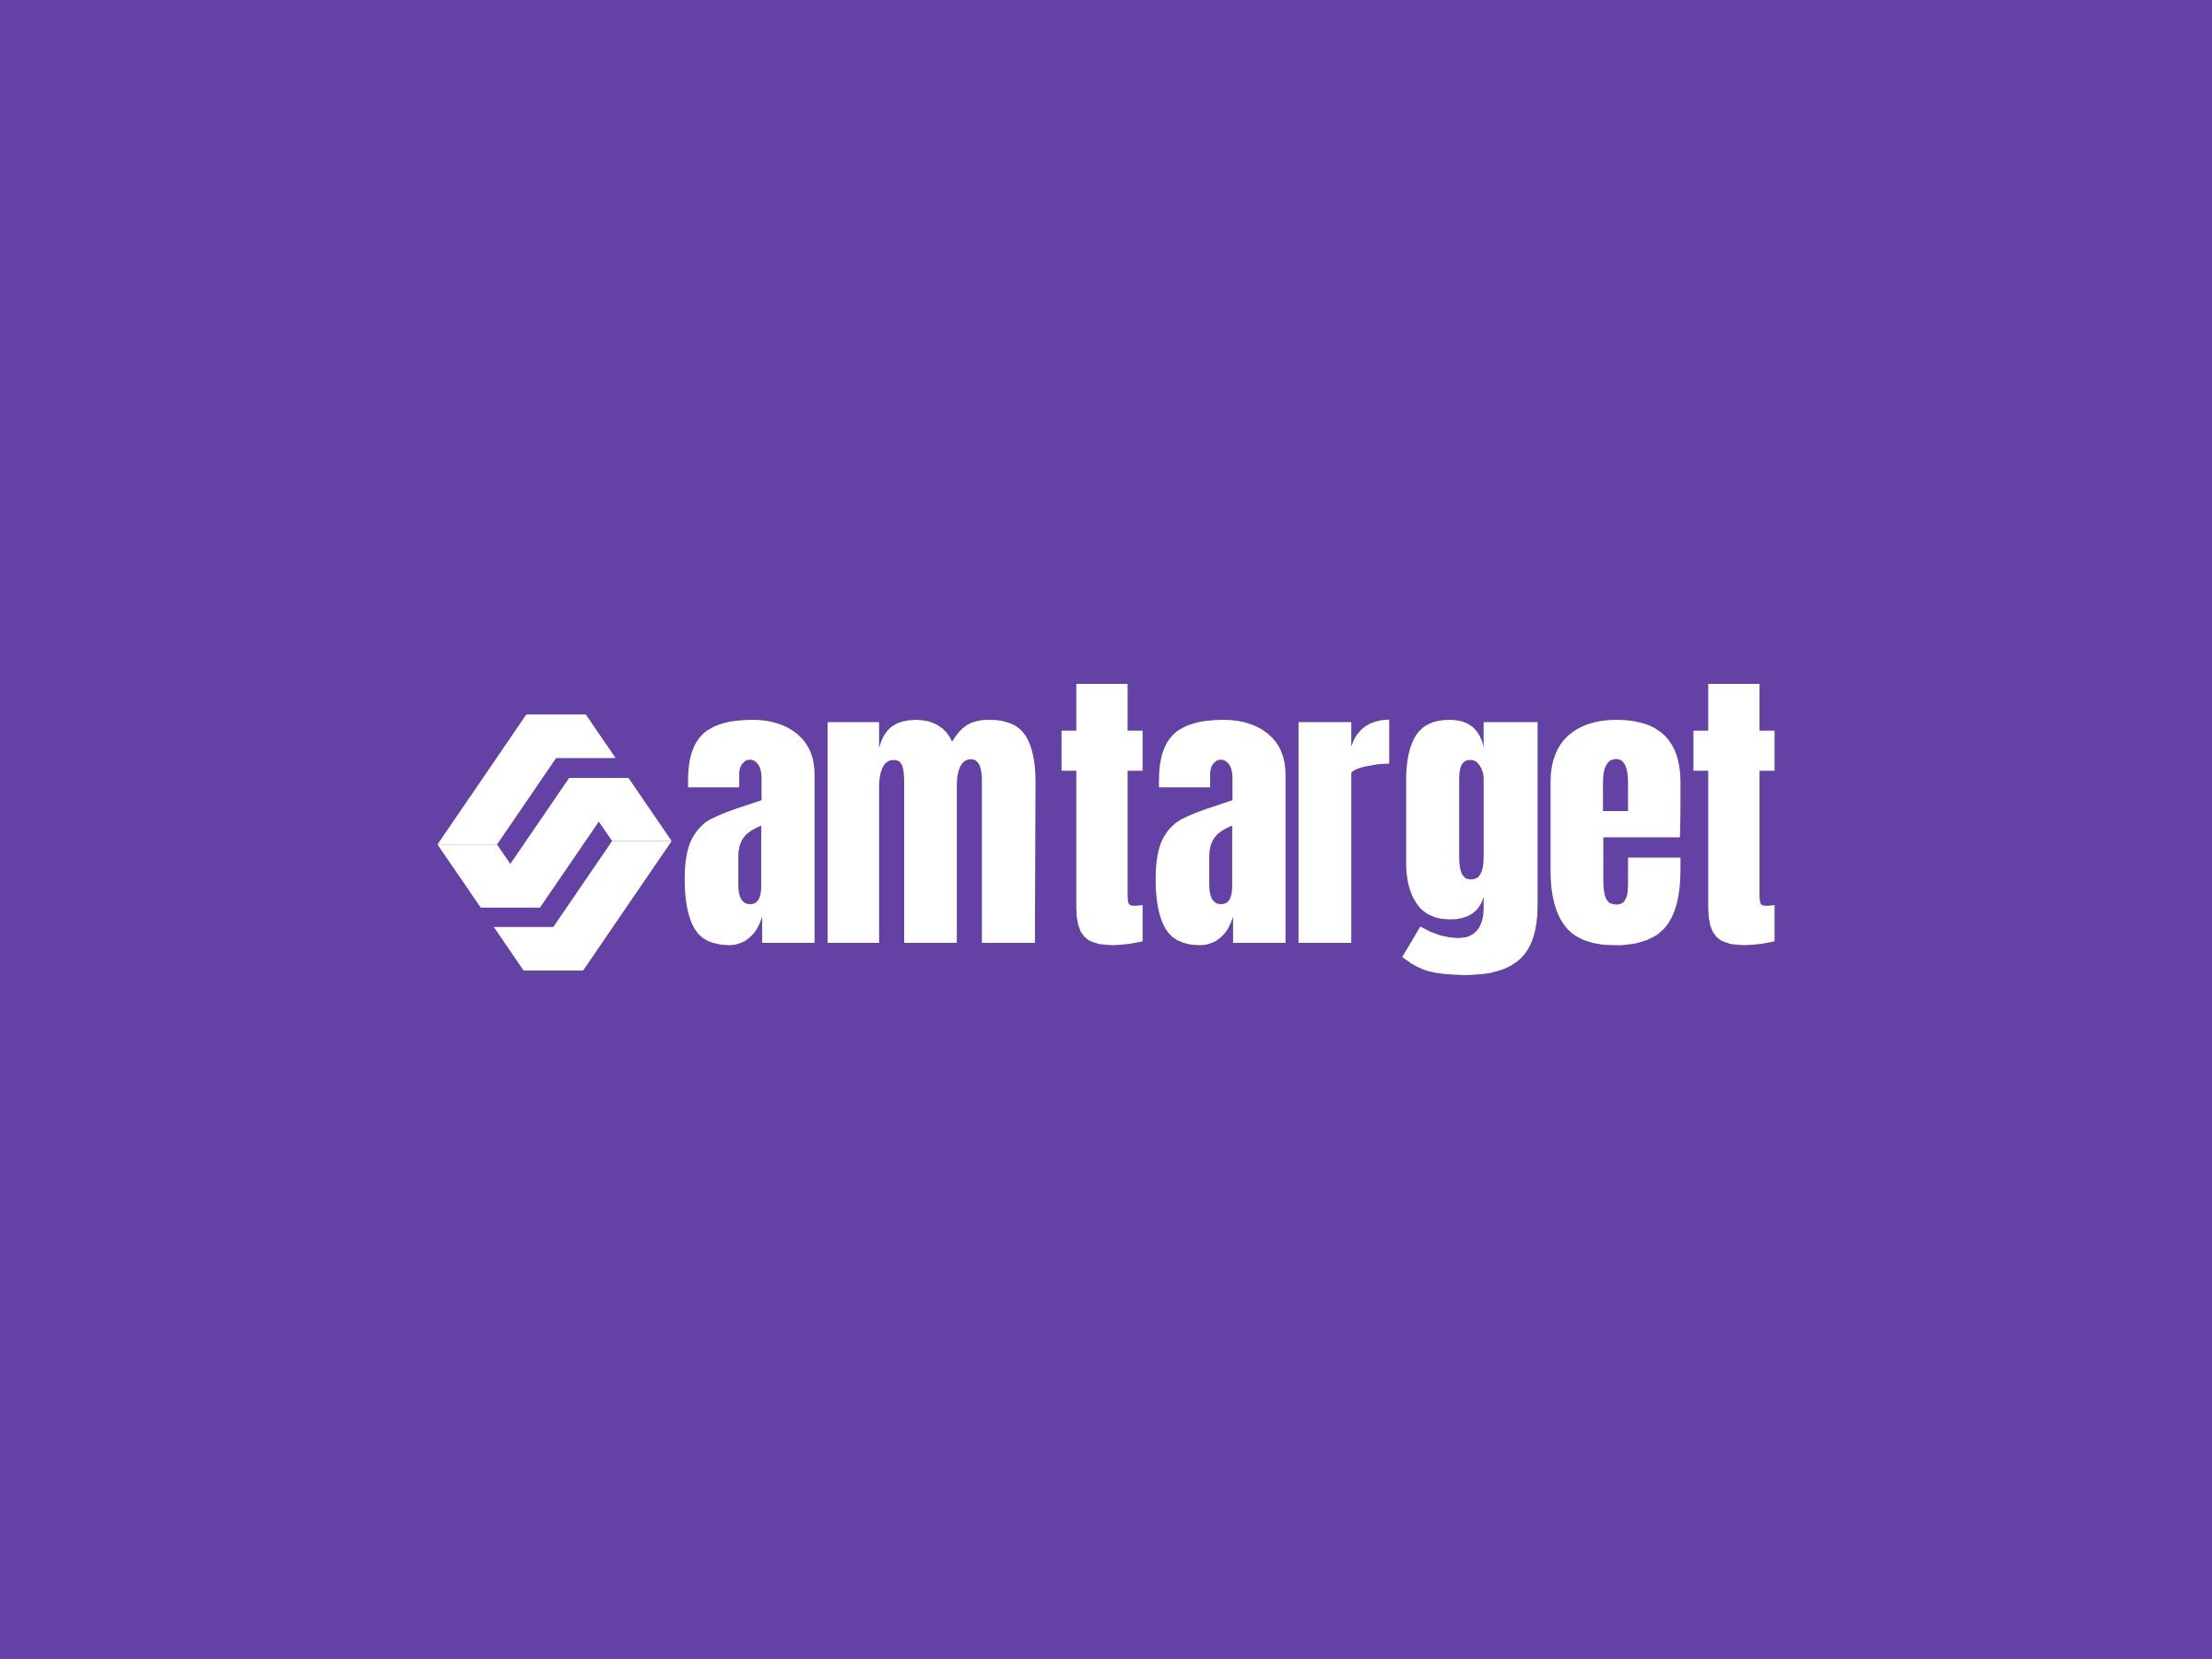 am target logo design